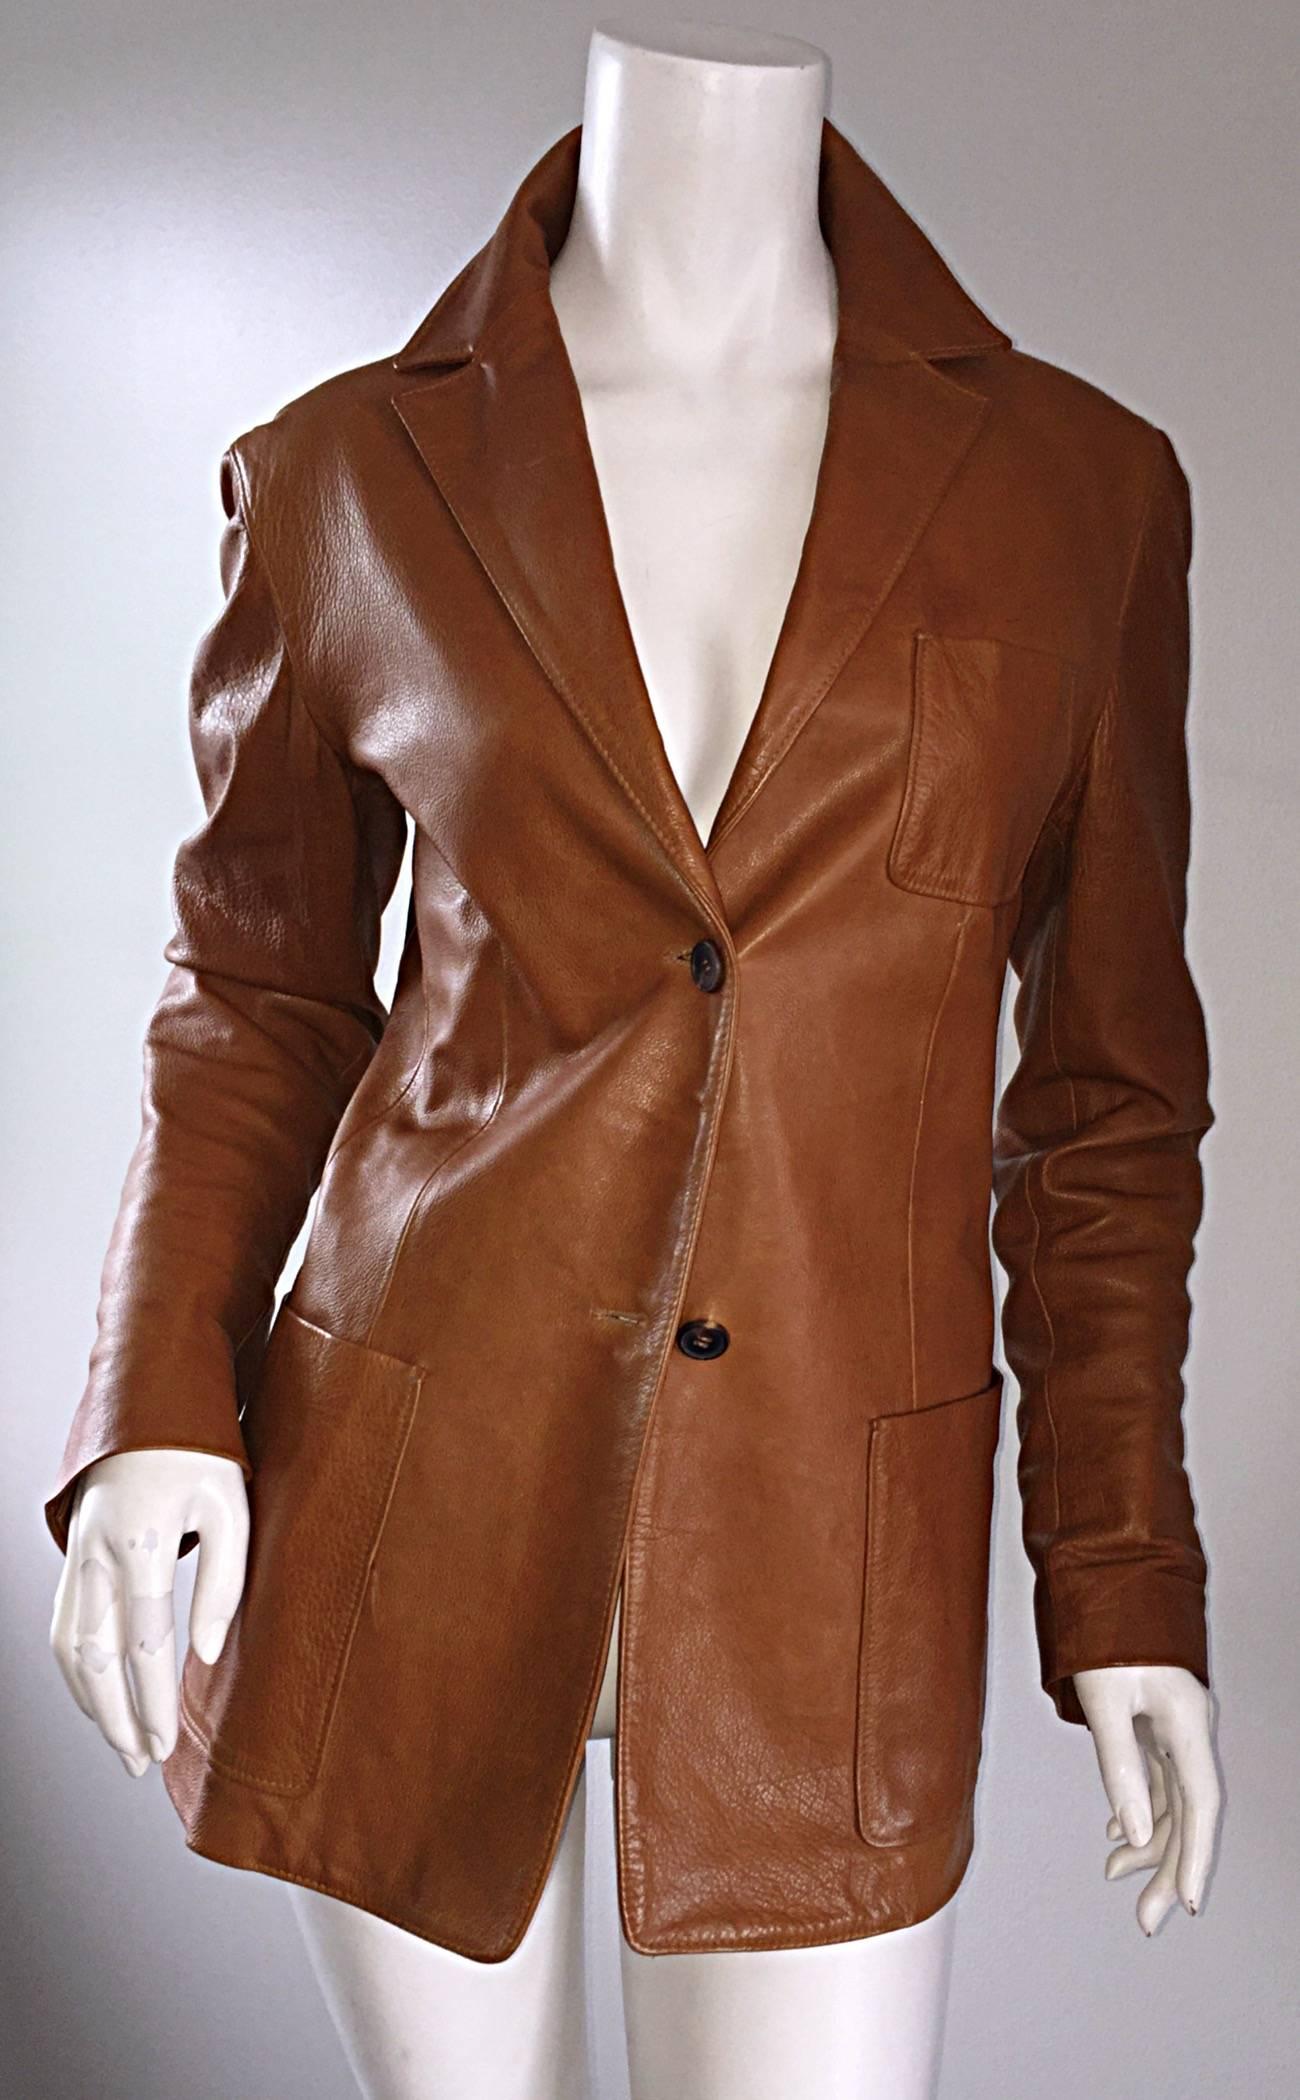 Women's Jil Sander Perfect Vintage 1990s Tan Saddle Leather Jacket Blazer Minimalist 